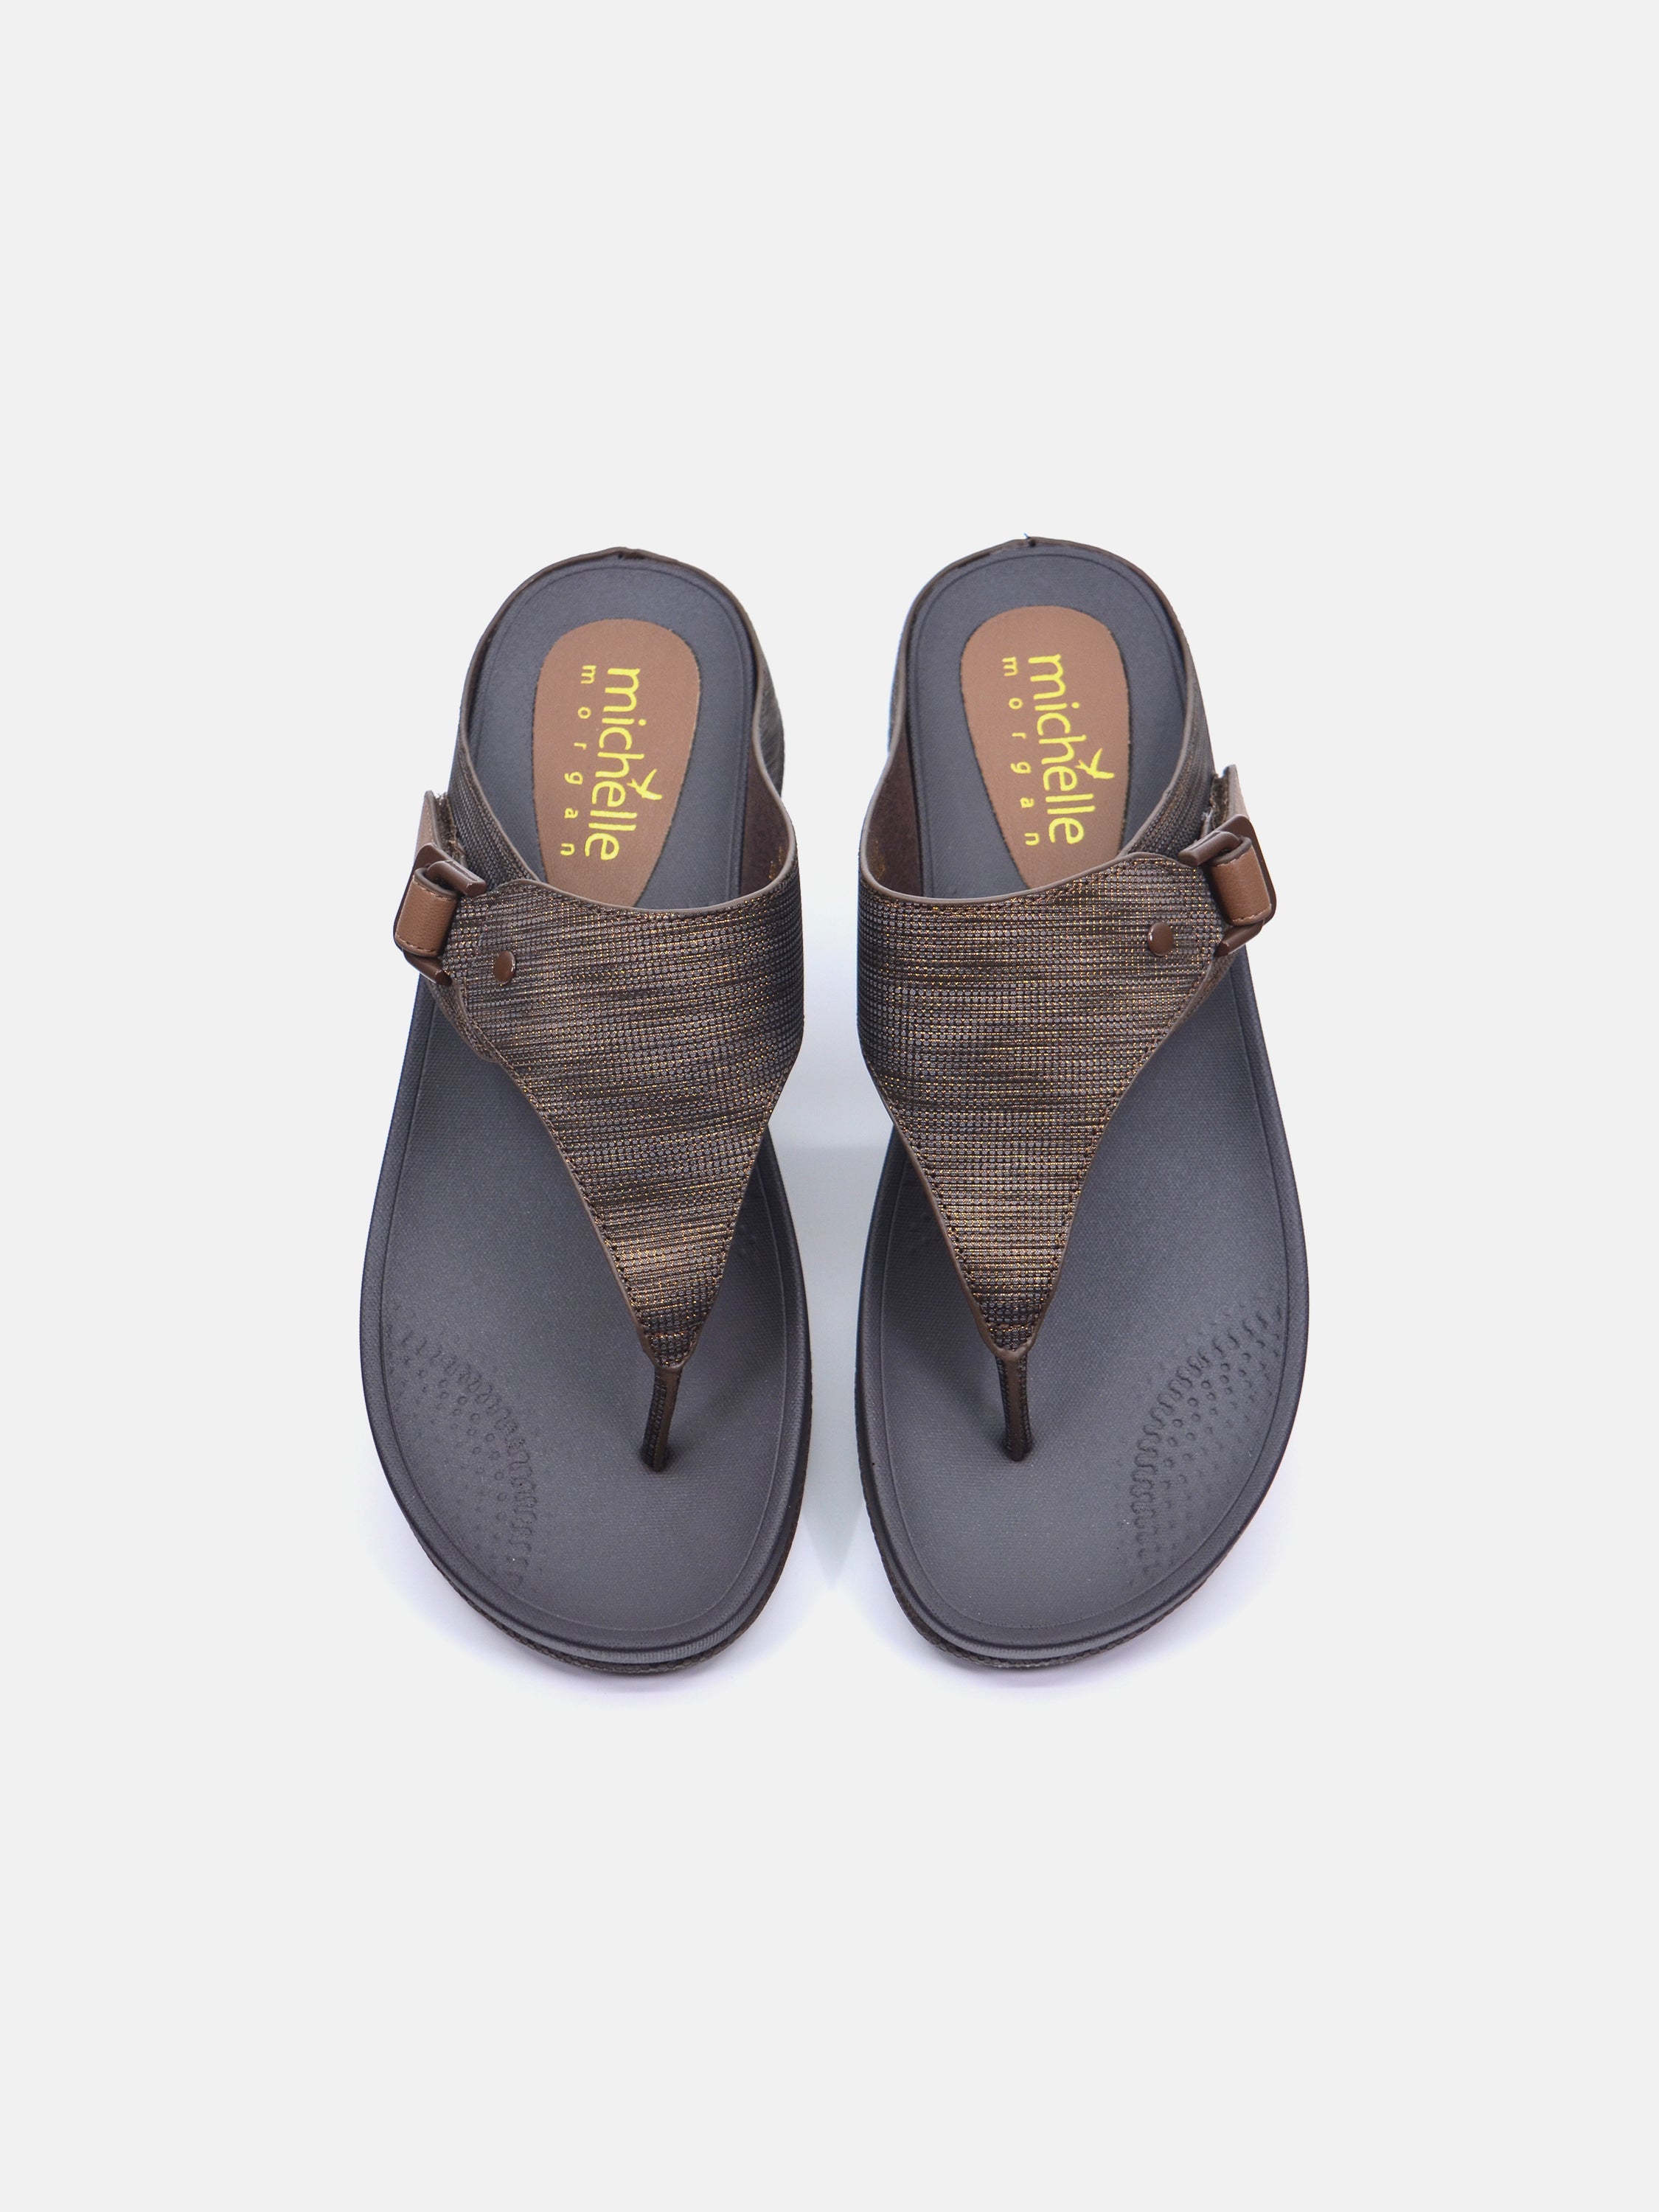 Michelle Morgan 814XY66A Women's Flat Sandals #color_Brown